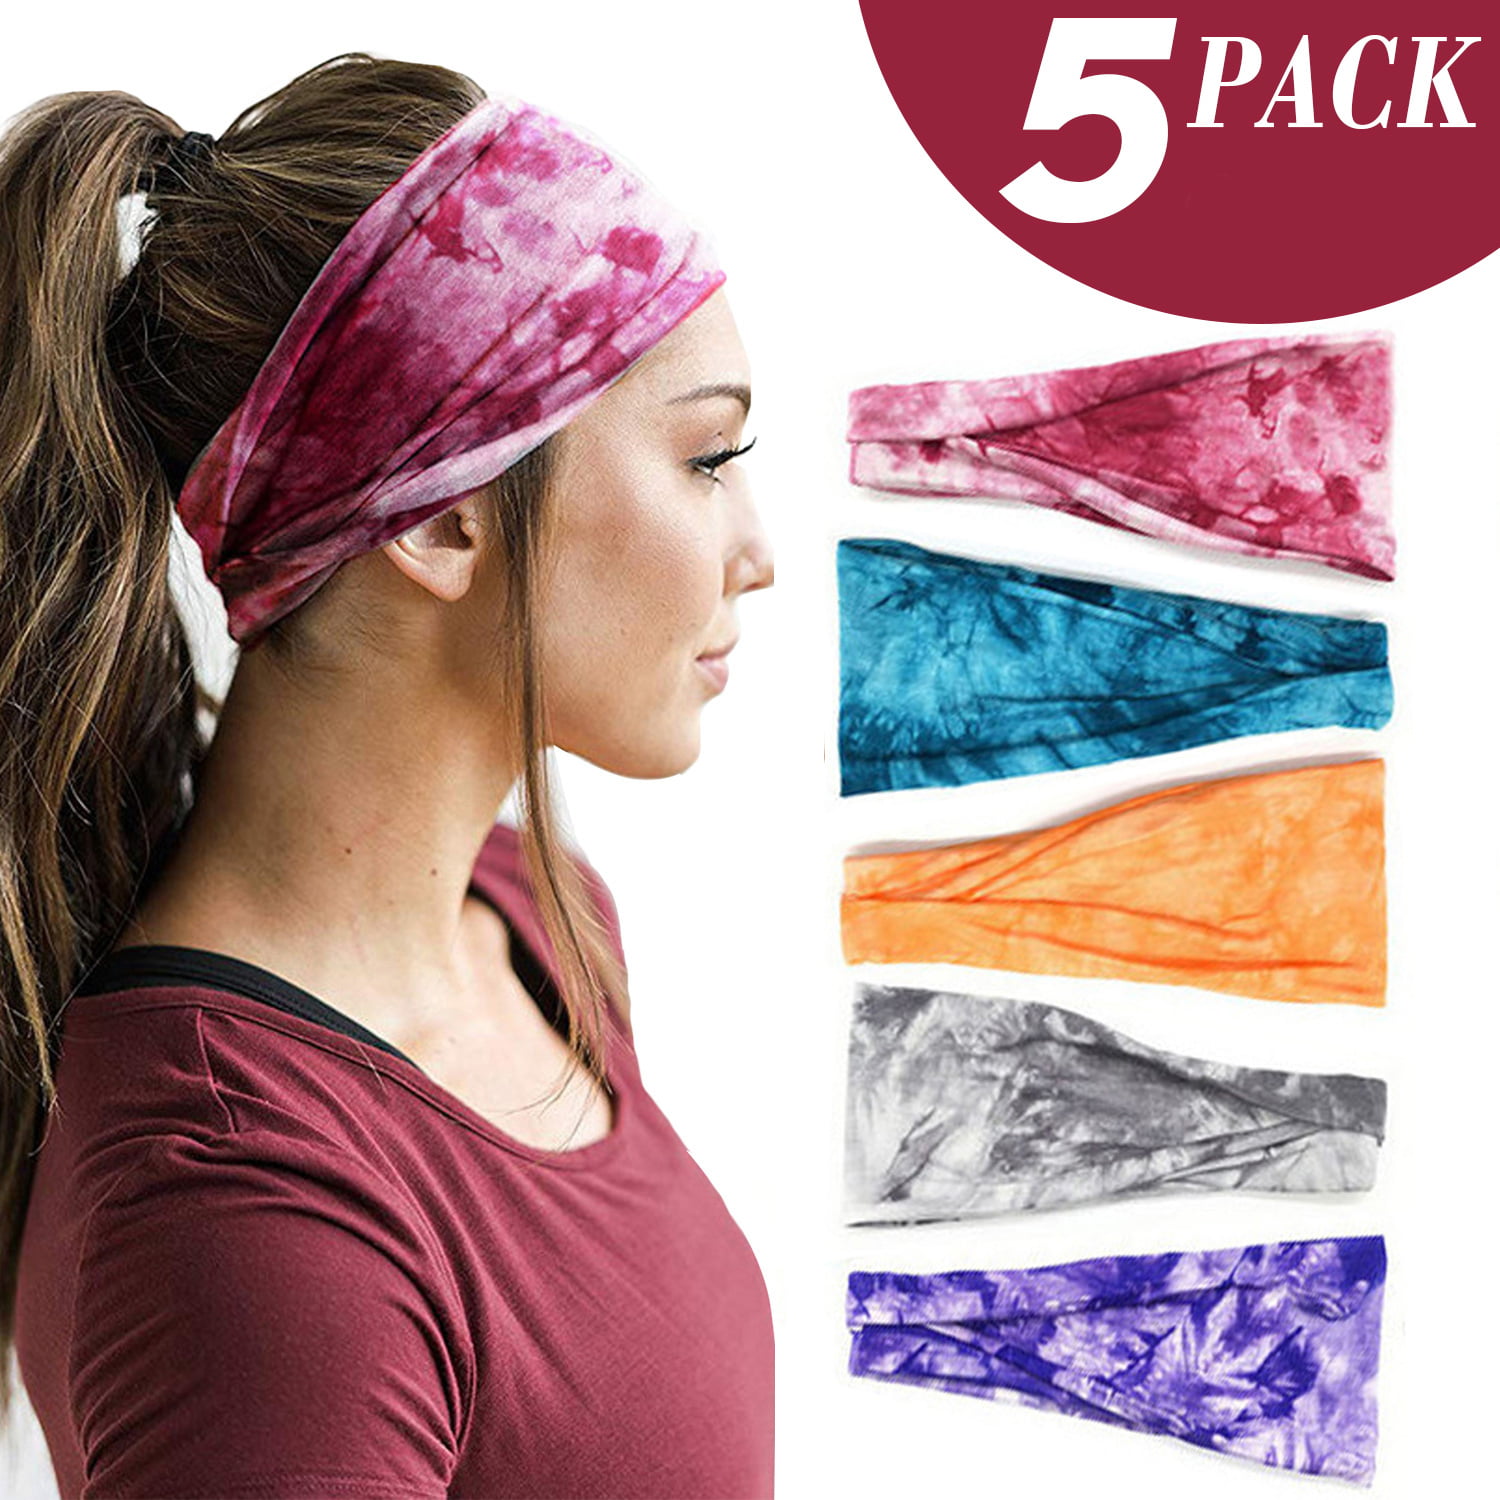 Women Sports Yoga Headband Gym Fitness Elastic Quick Dry Sweatband Headwrap 